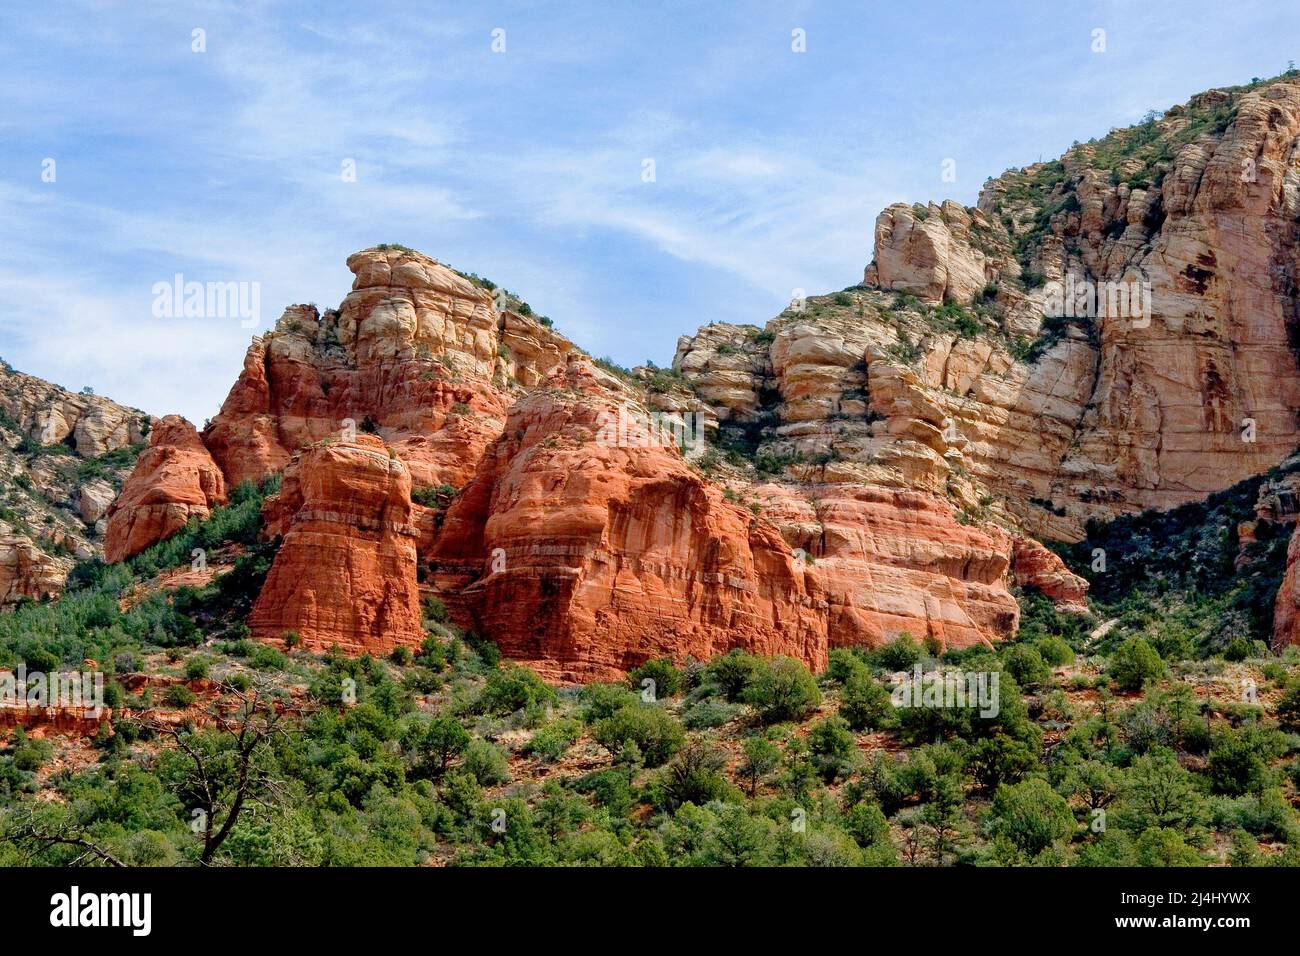 Landscape of the Sedona area, Arizona Stock Photo